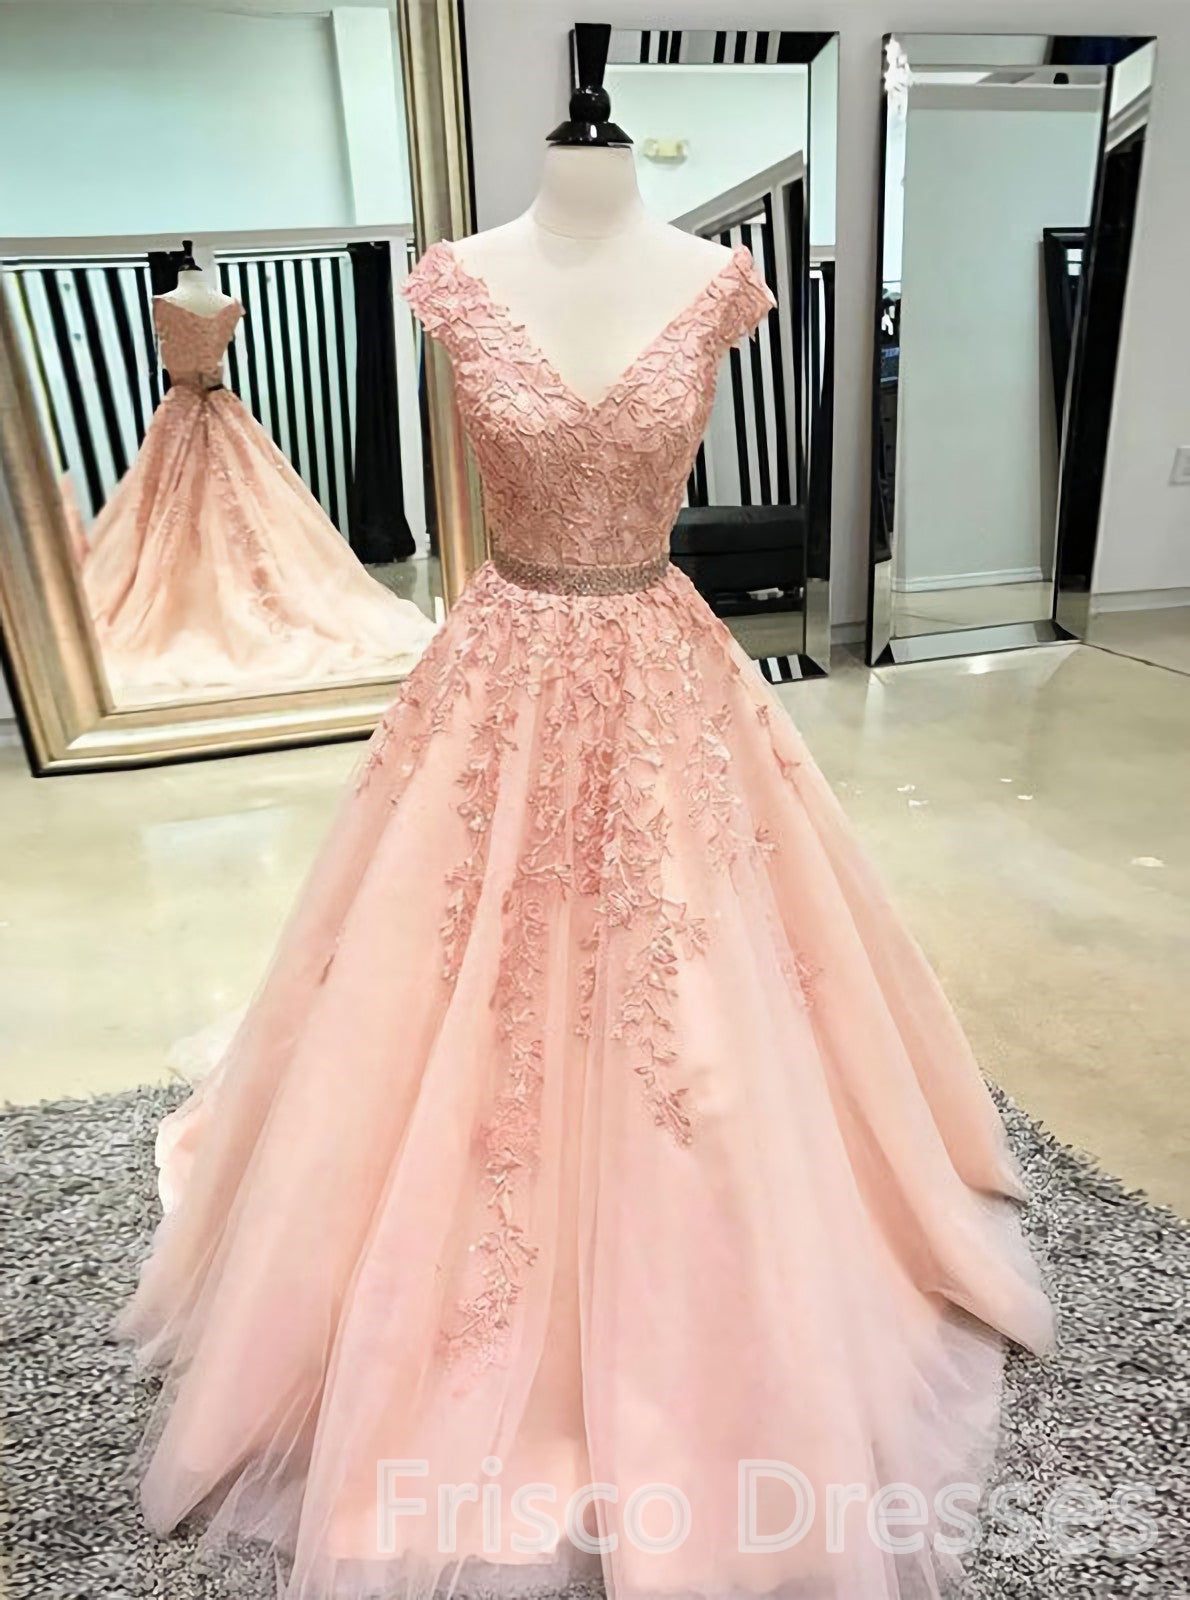 Bridesmaids Dresses Websites, Pink Sleeveless V Neck Tulle Lace Applique Long Prom Dresses